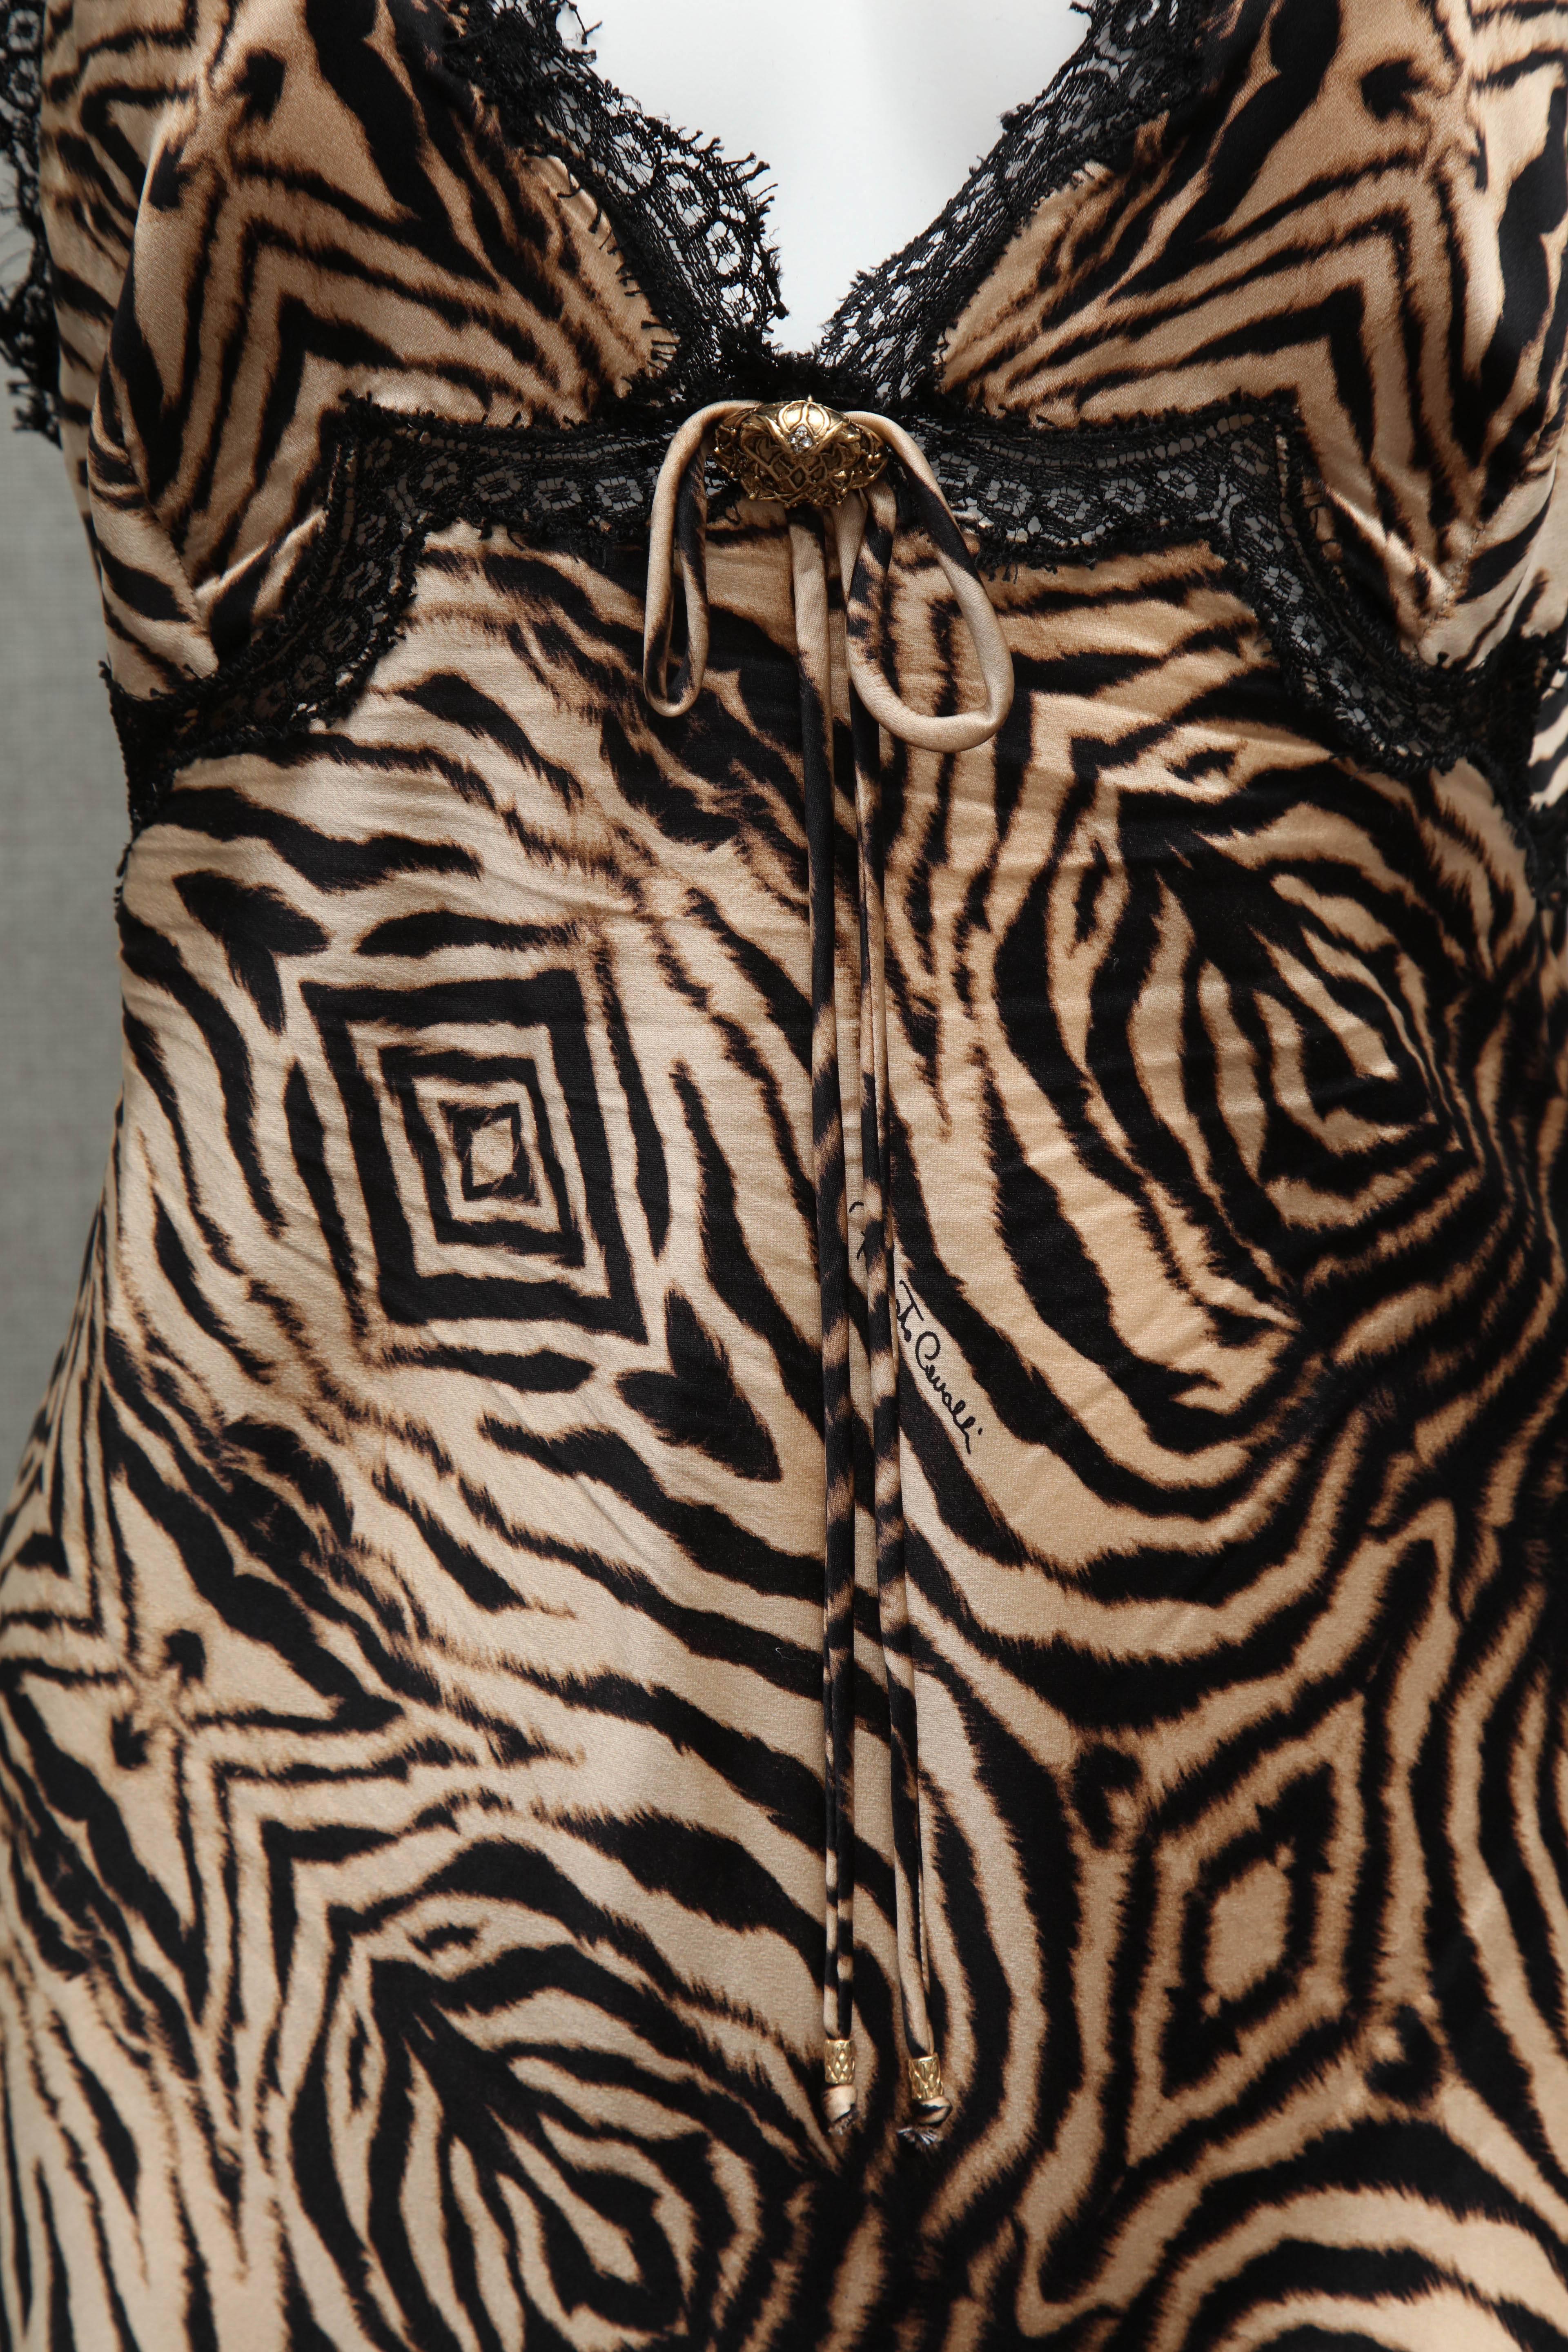 Roberto Cavalli Leopard Print silk slip dress with lace details. 

Size: 42